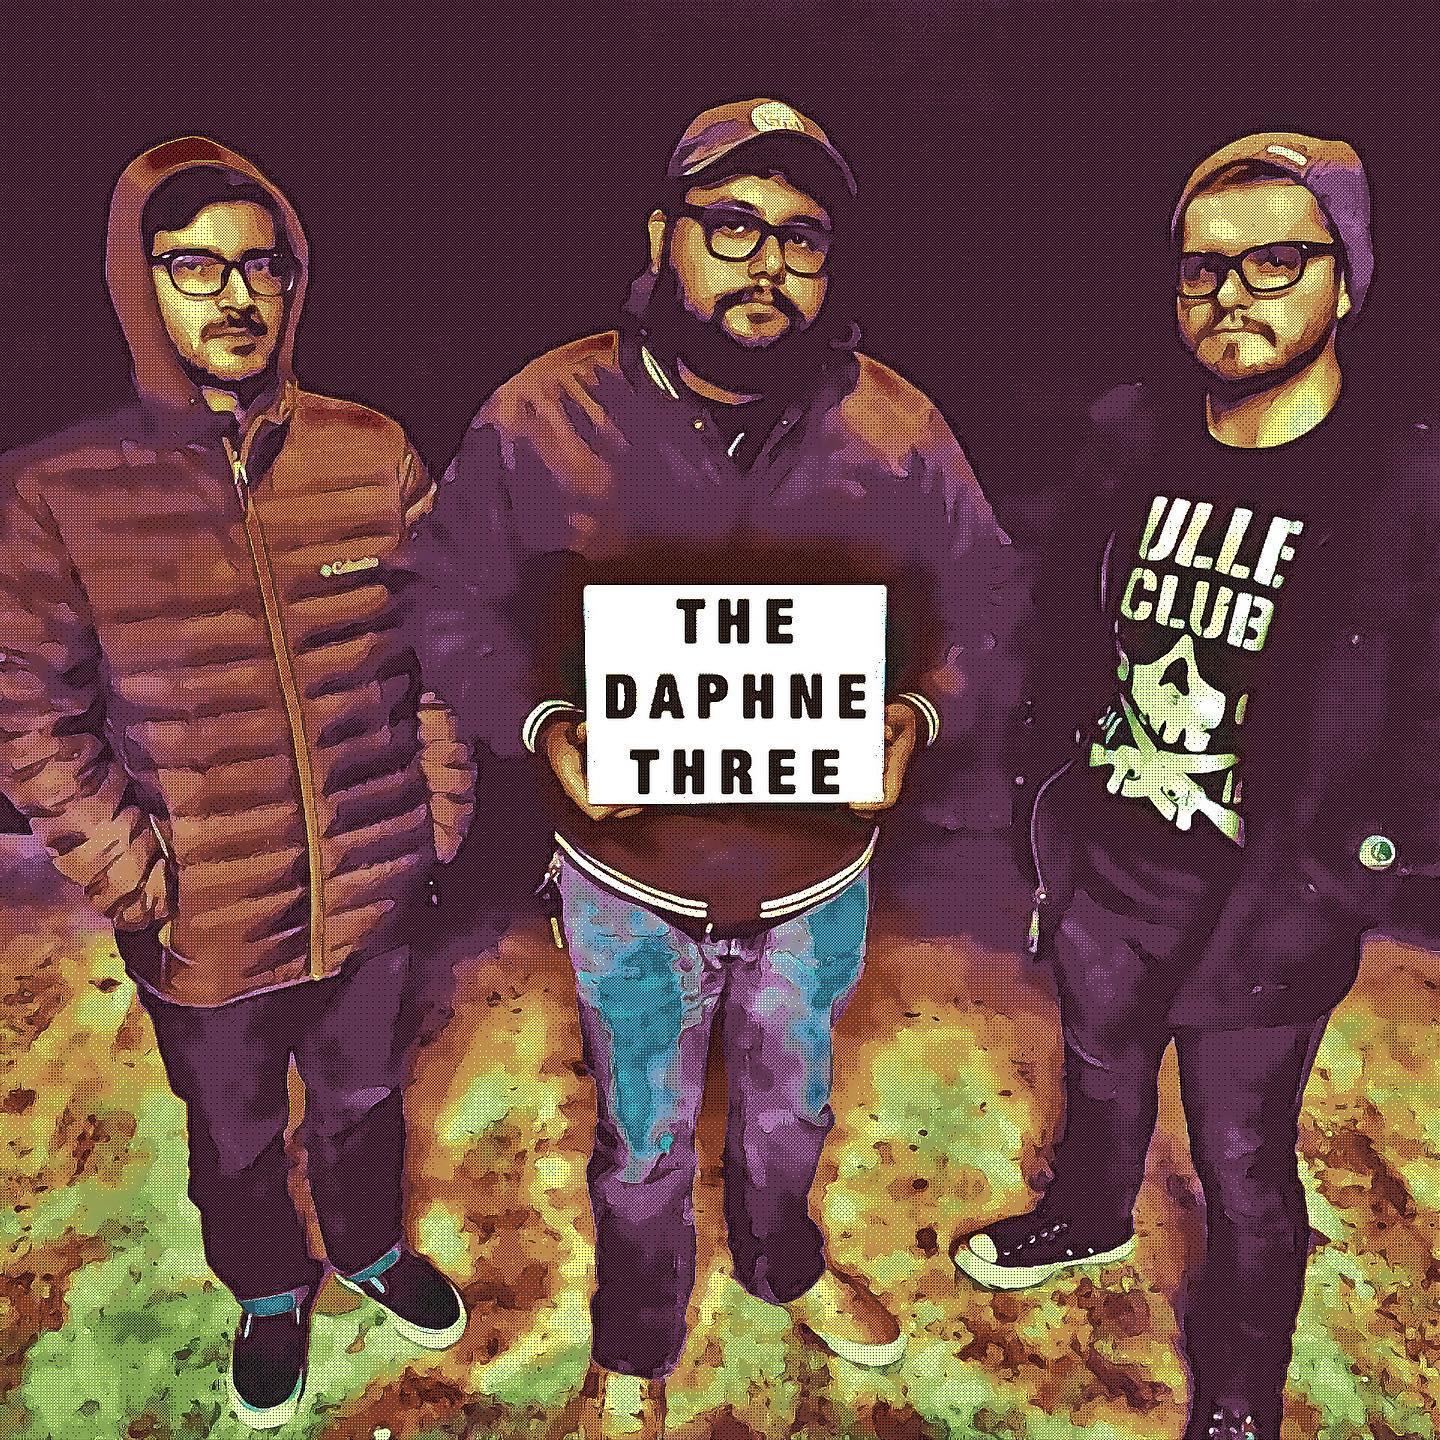 The Daphne Three